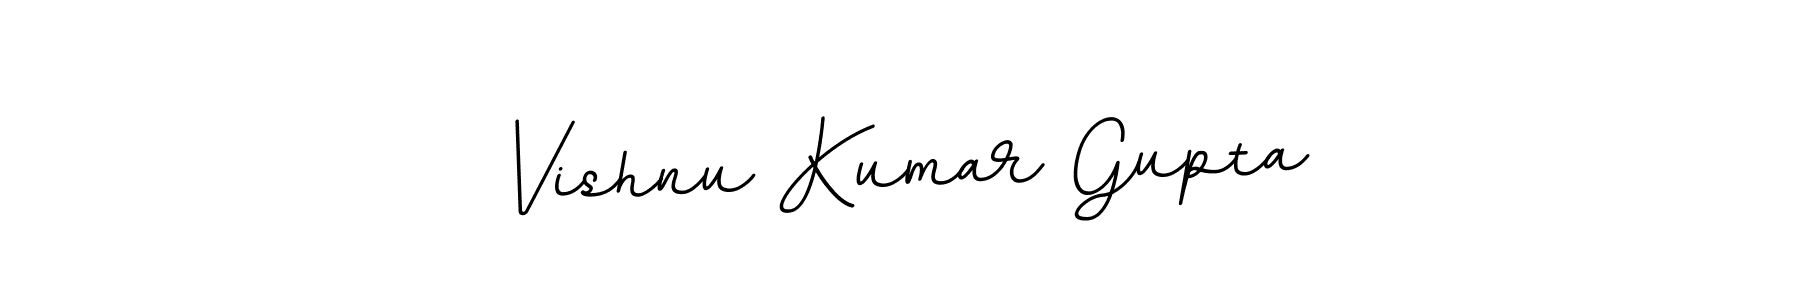 Make a beautiful signature design for name Vishnu Kumar Gupta. Use this online signature maker to create a handwritten signature for free. Vishnu Kumar Gupta signature style 11 images and pictures png